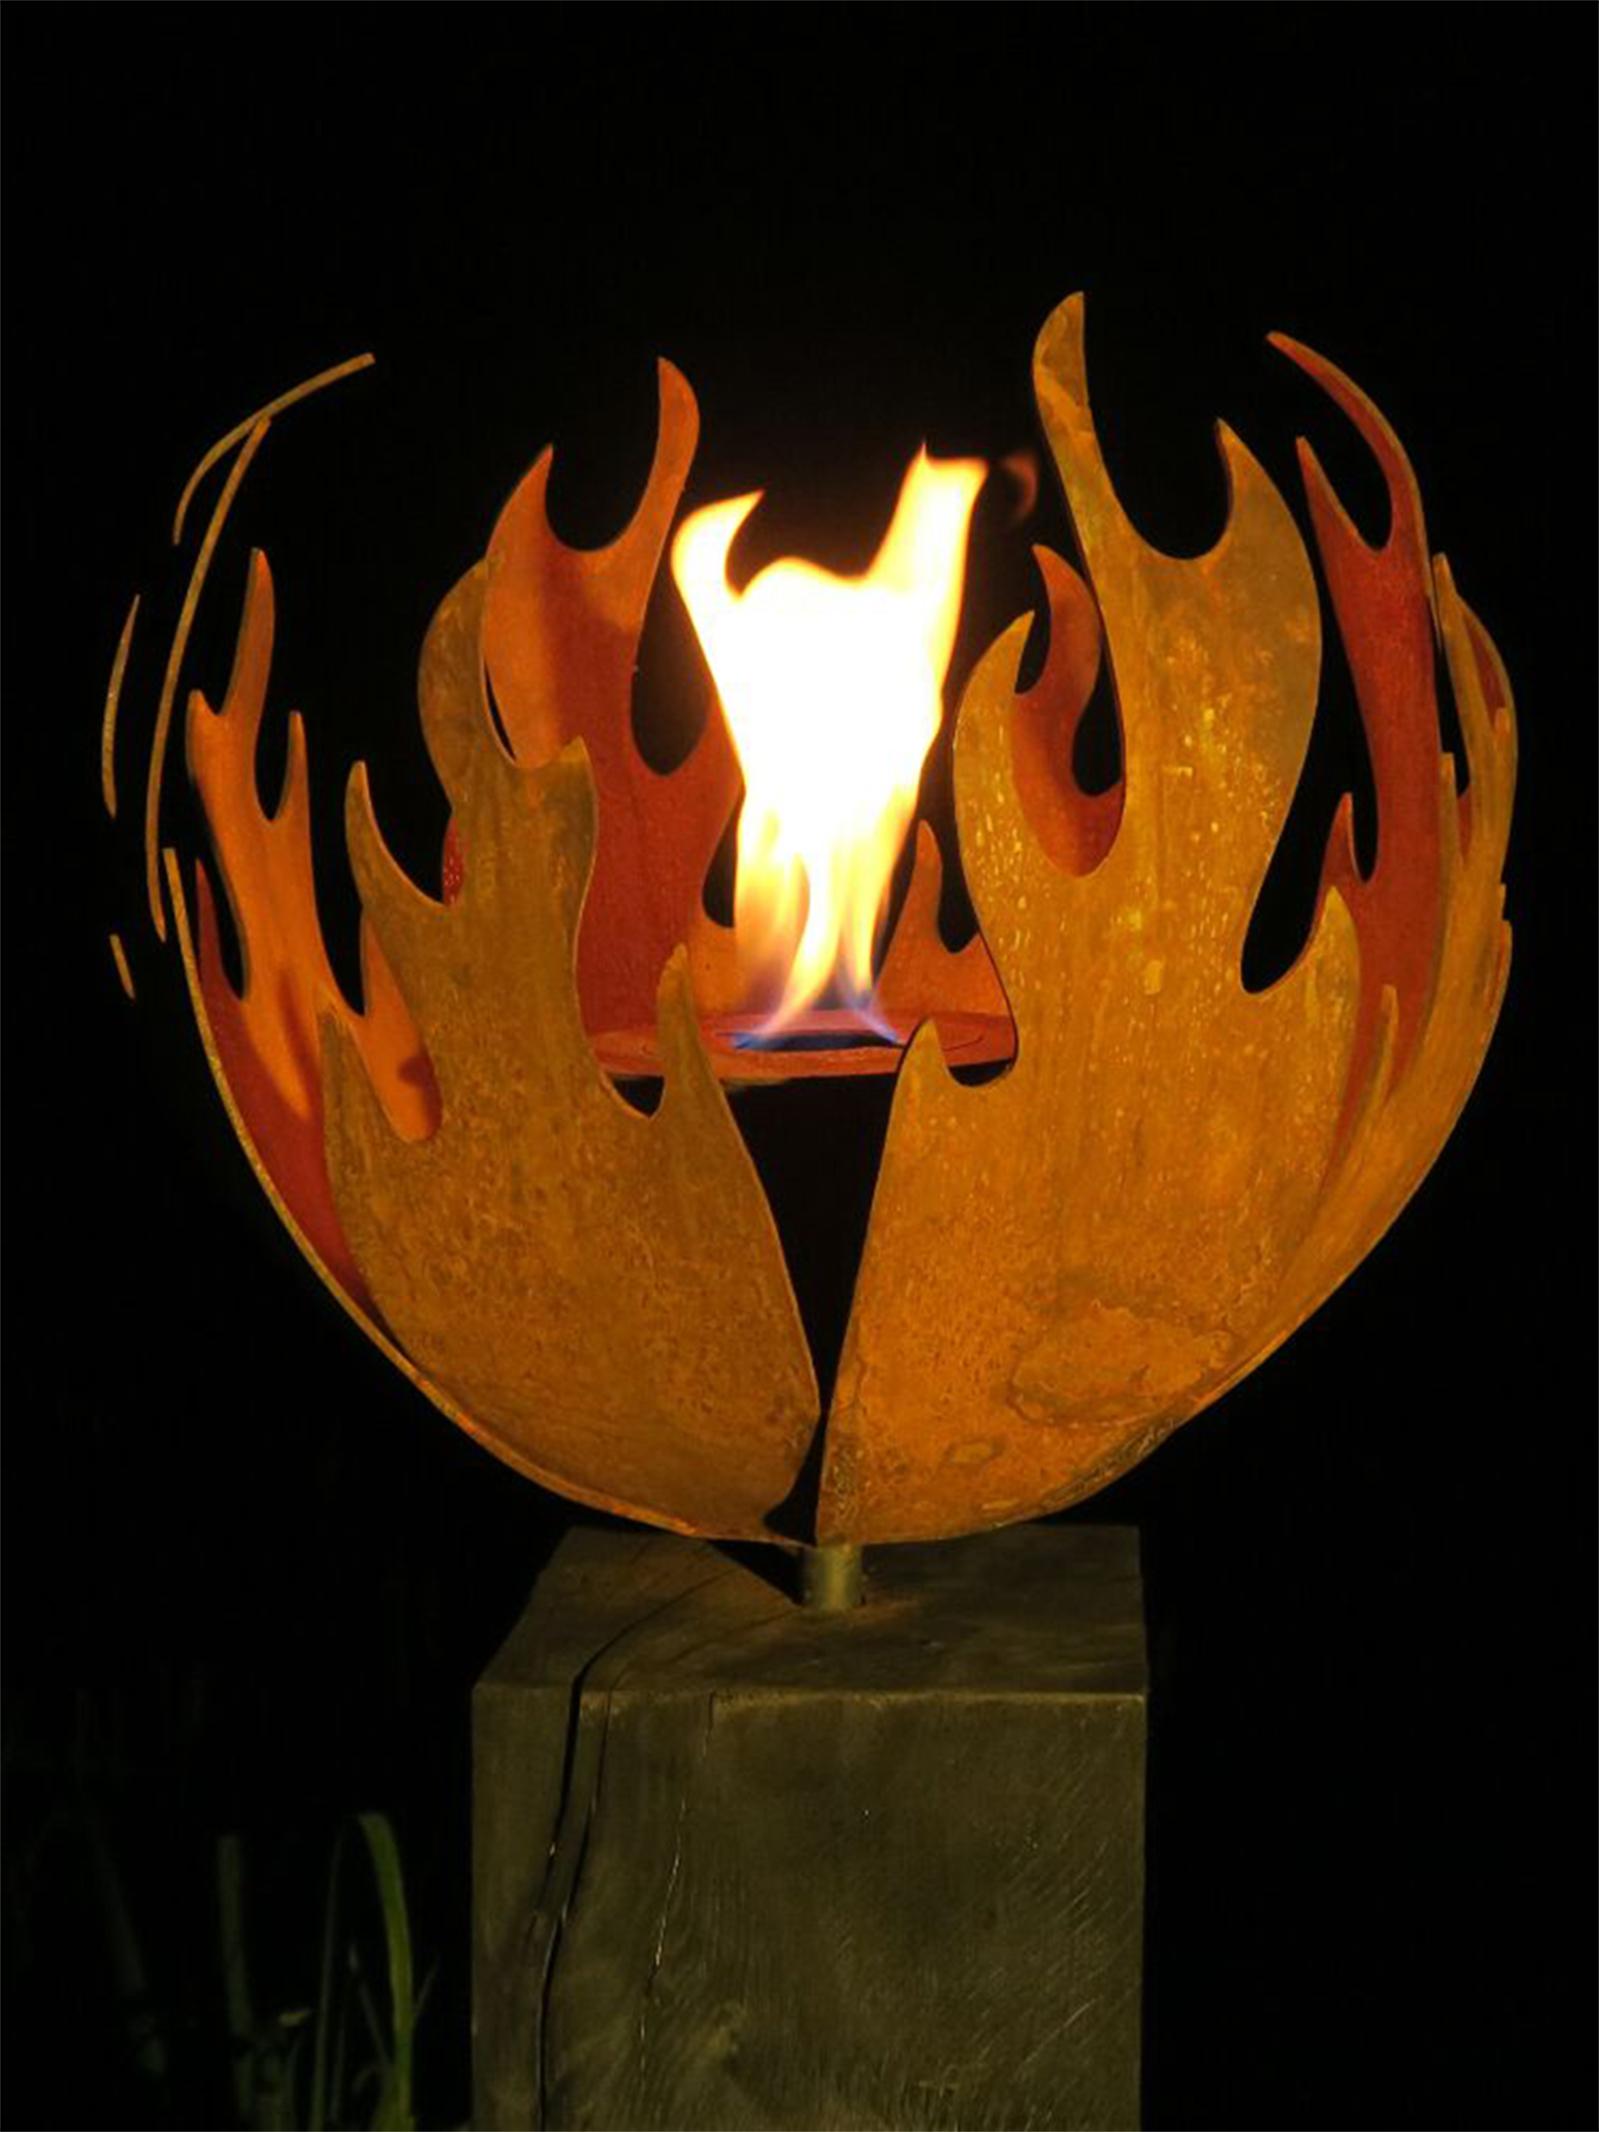 Outdoor Fire Pit - "Flame" - on oxidised oak pedestal - Medium Height - Mixed Media Art by Stefan Traloc